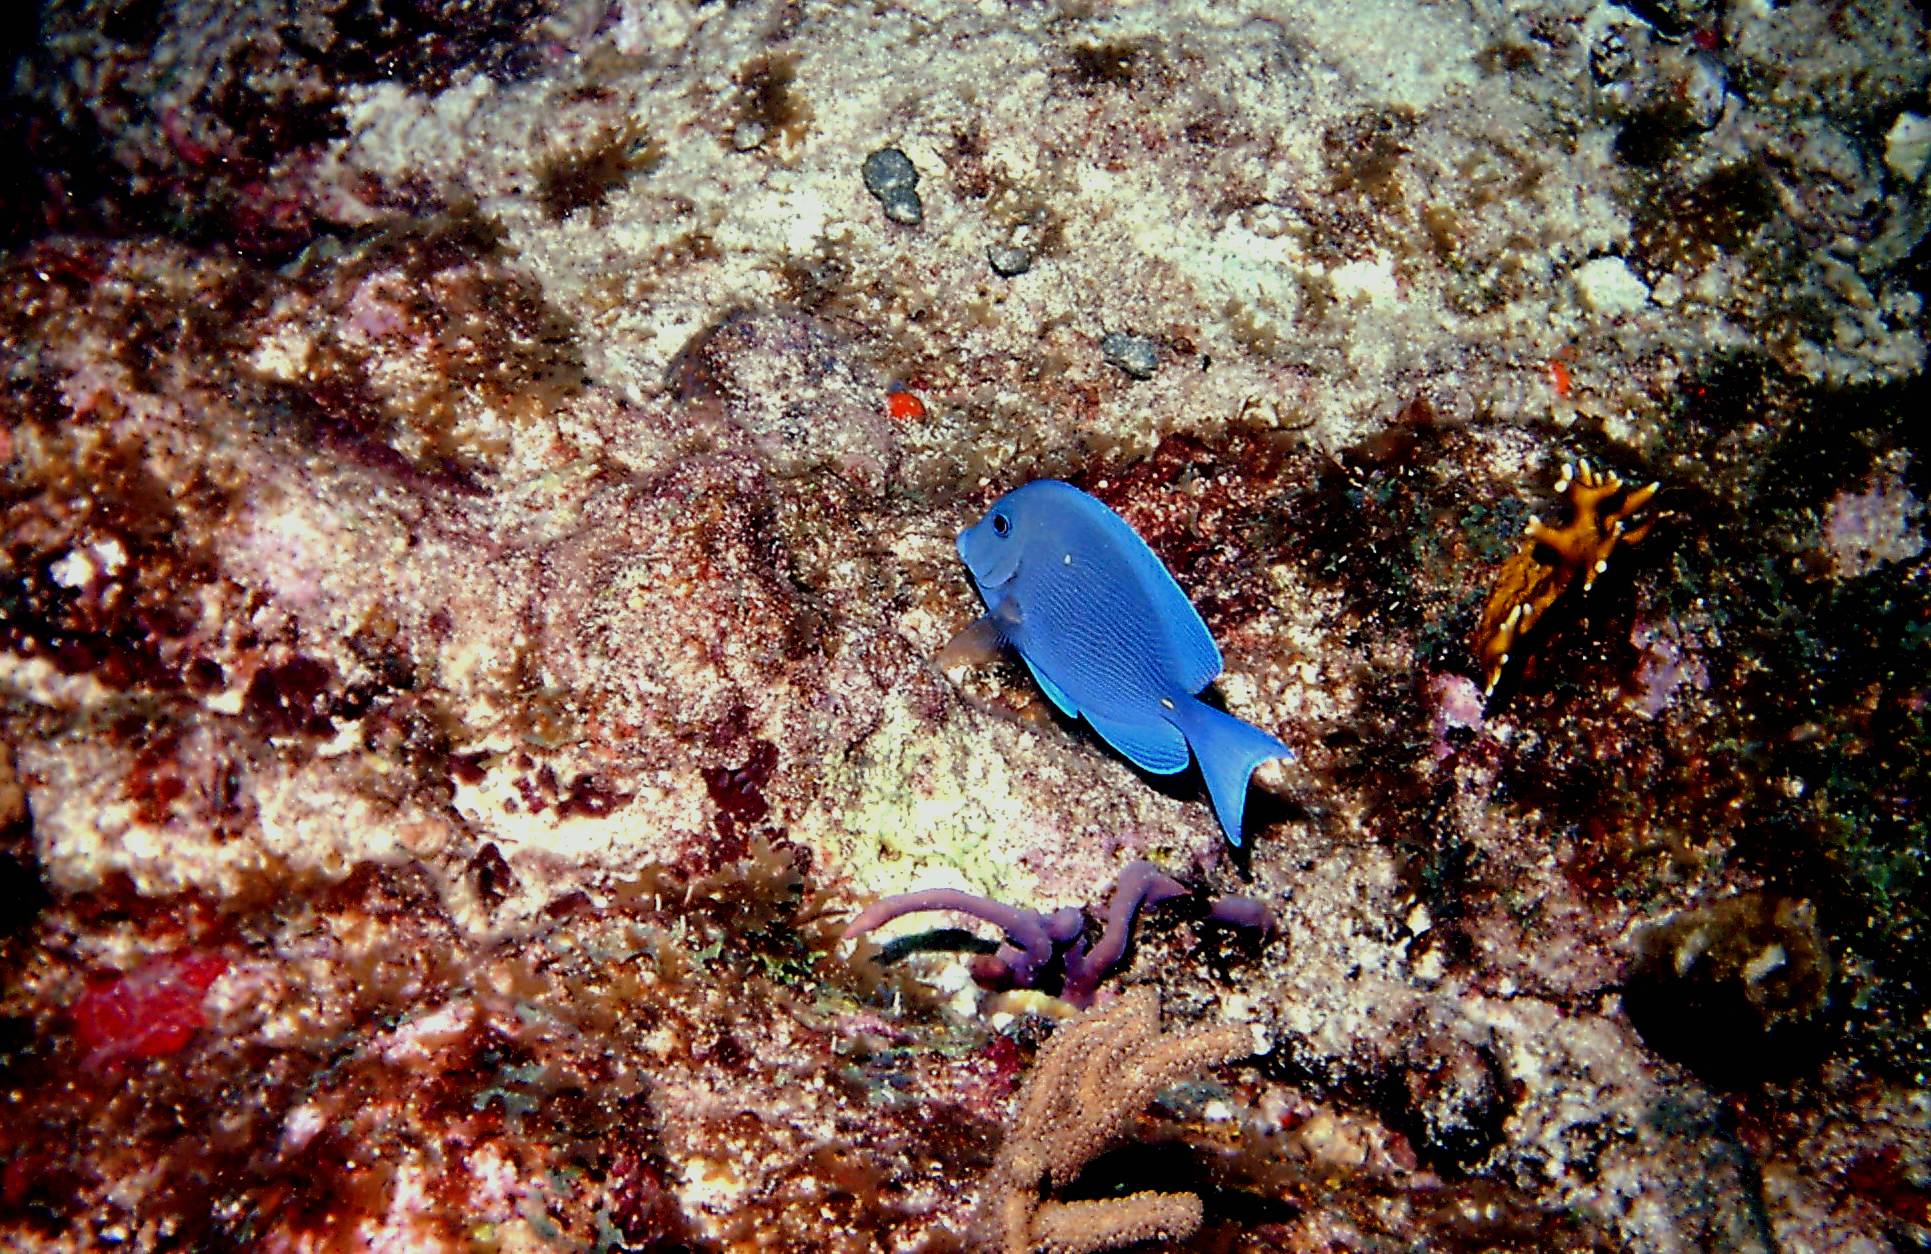 OneBlueFish